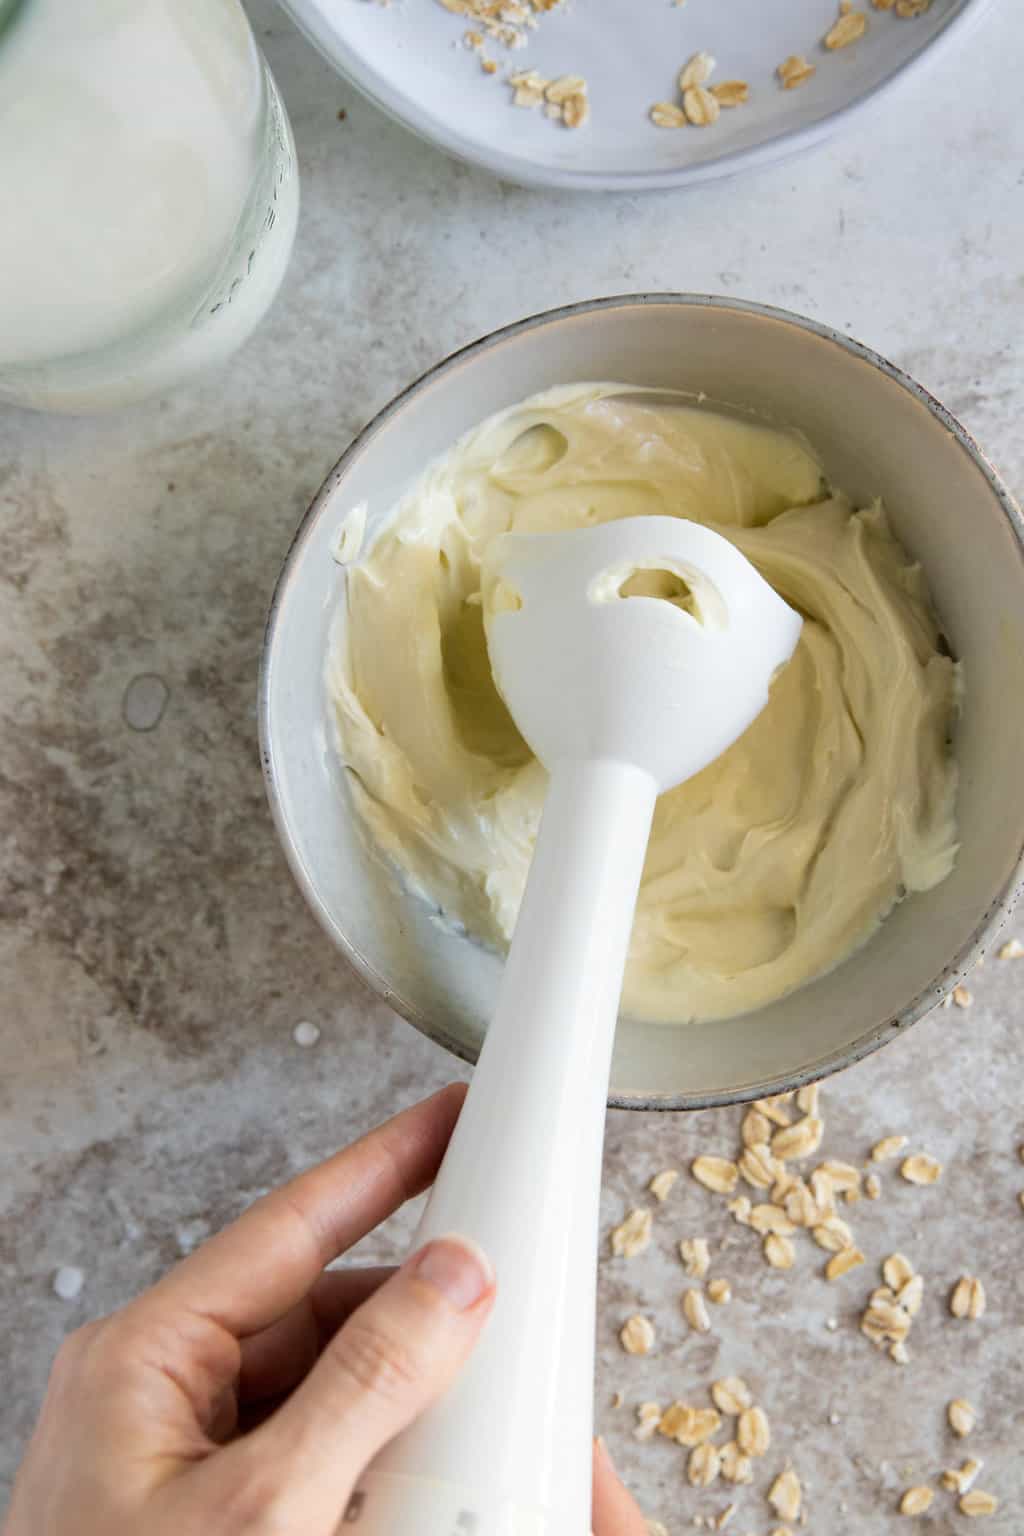 Blending to create homemade oatmeal lotion